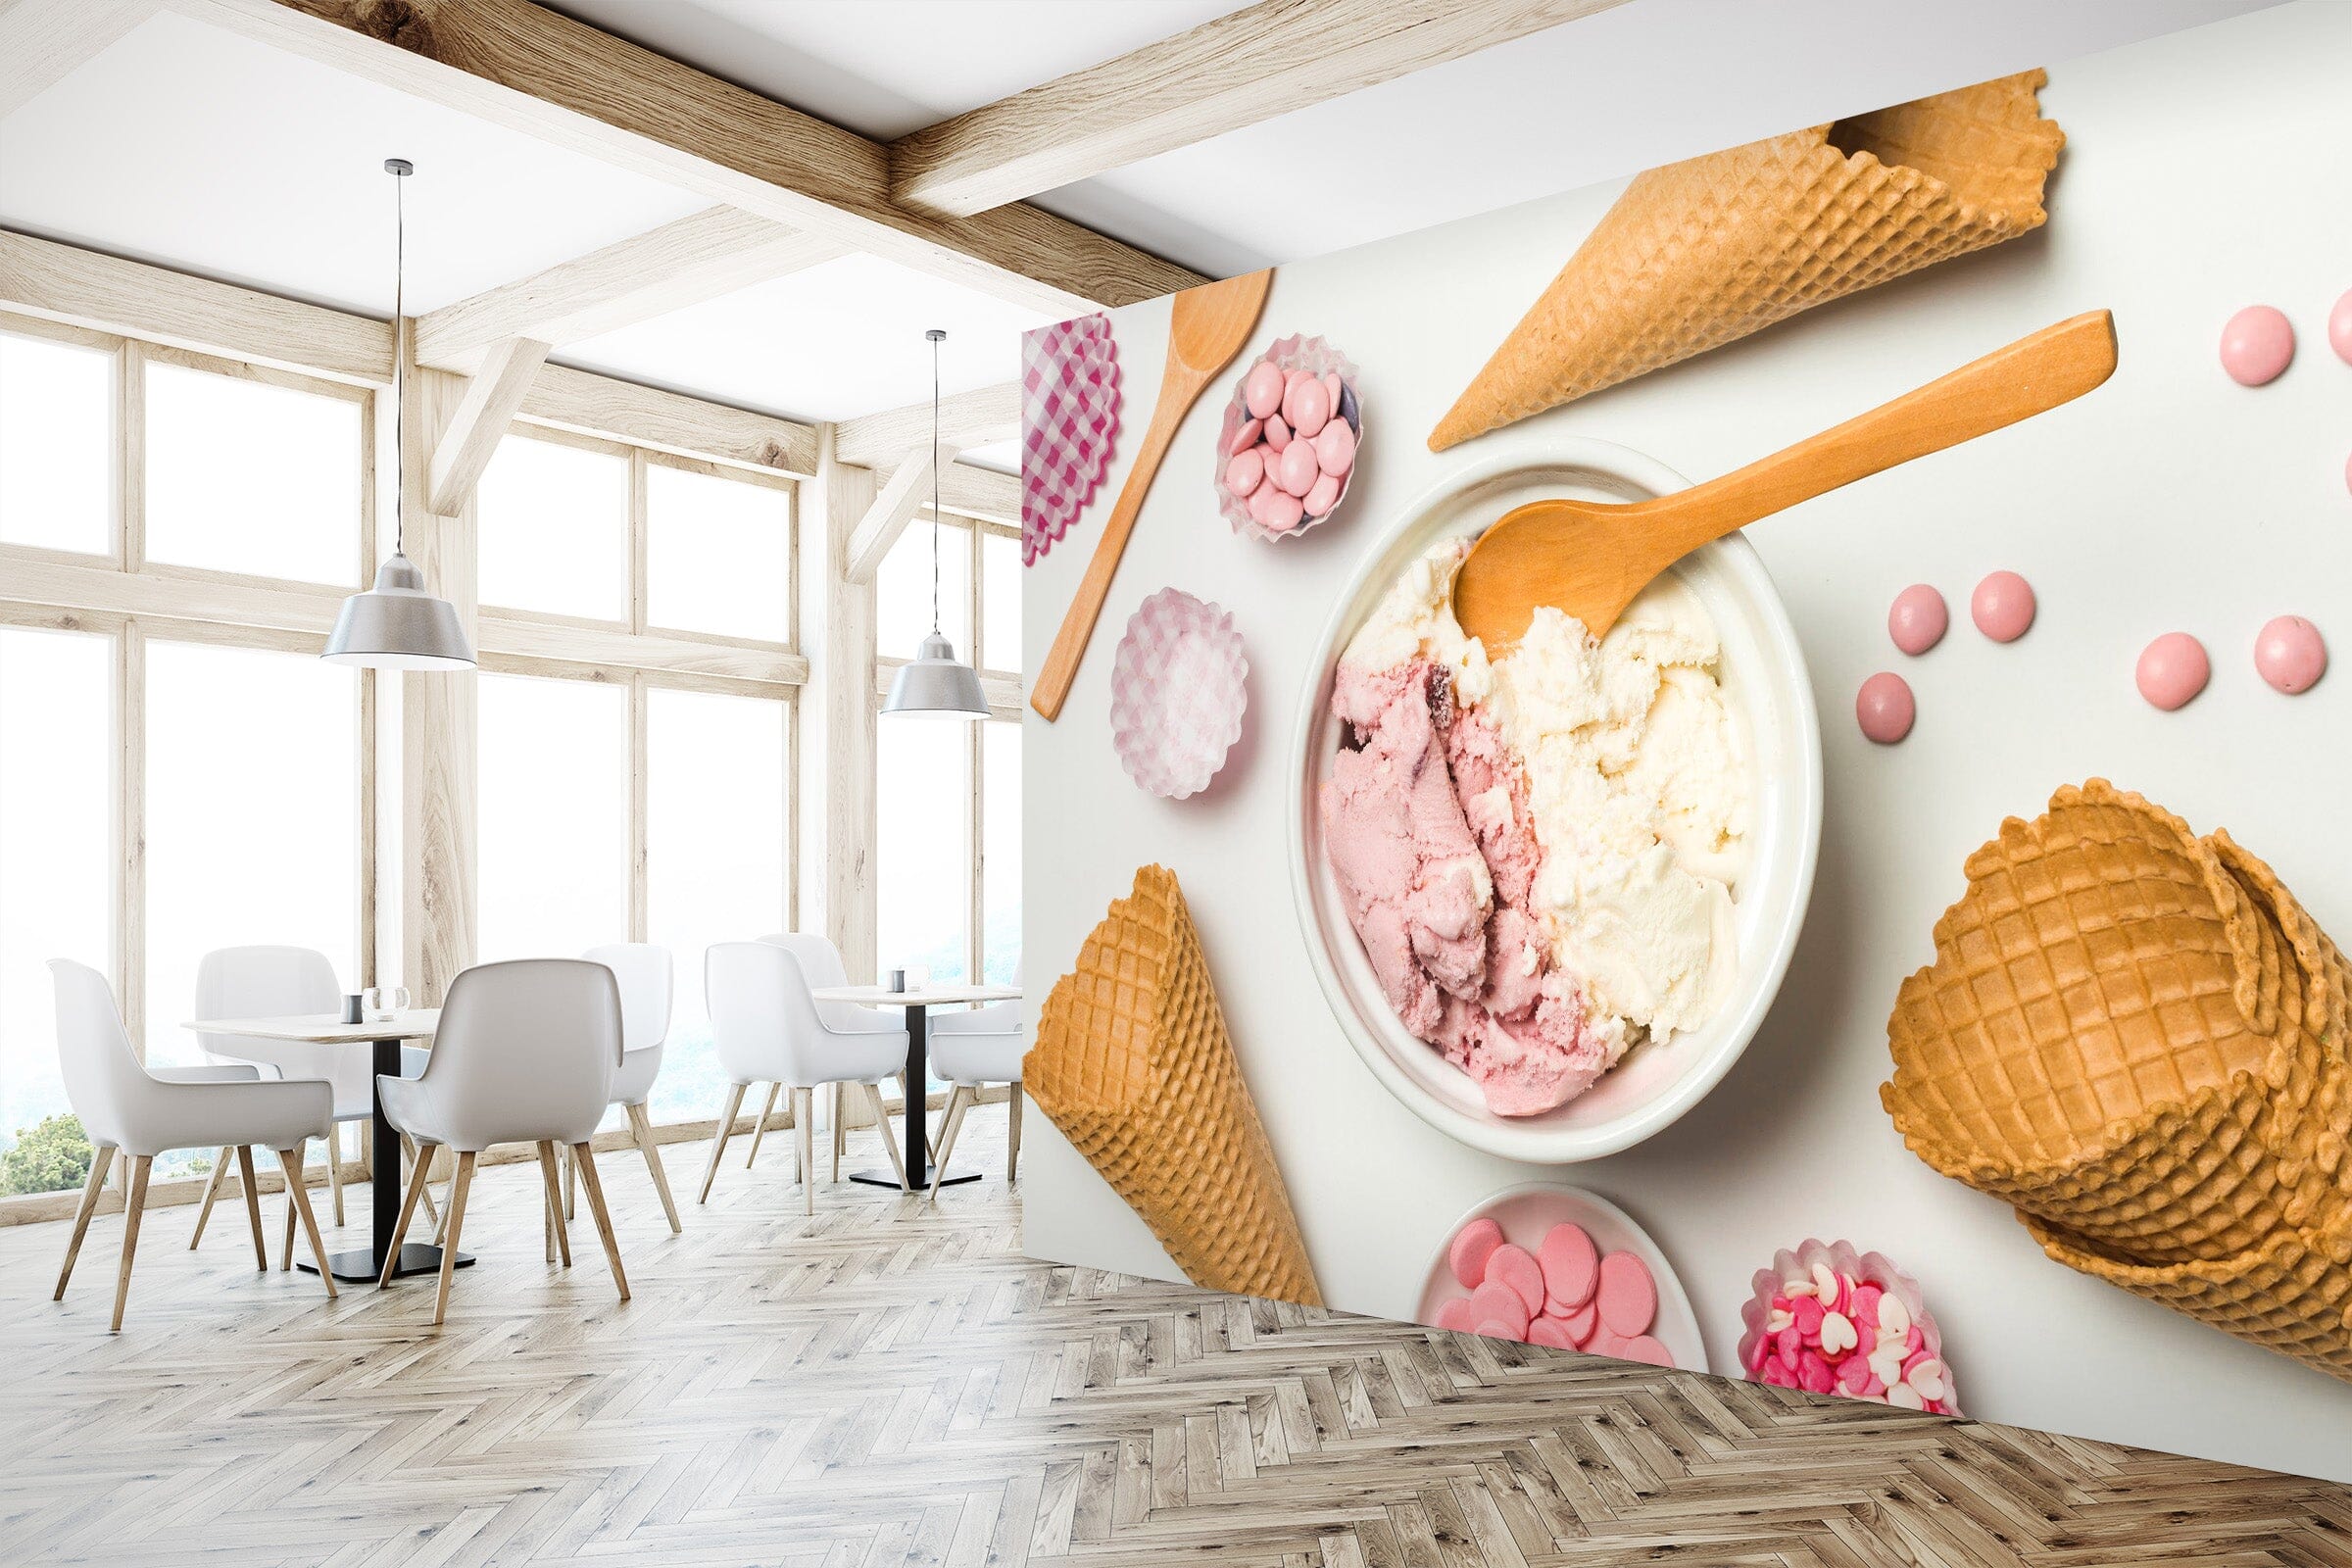 3D Ice Cream 1410 Wall Murals Wallpaper AJ Wallpaper 2 